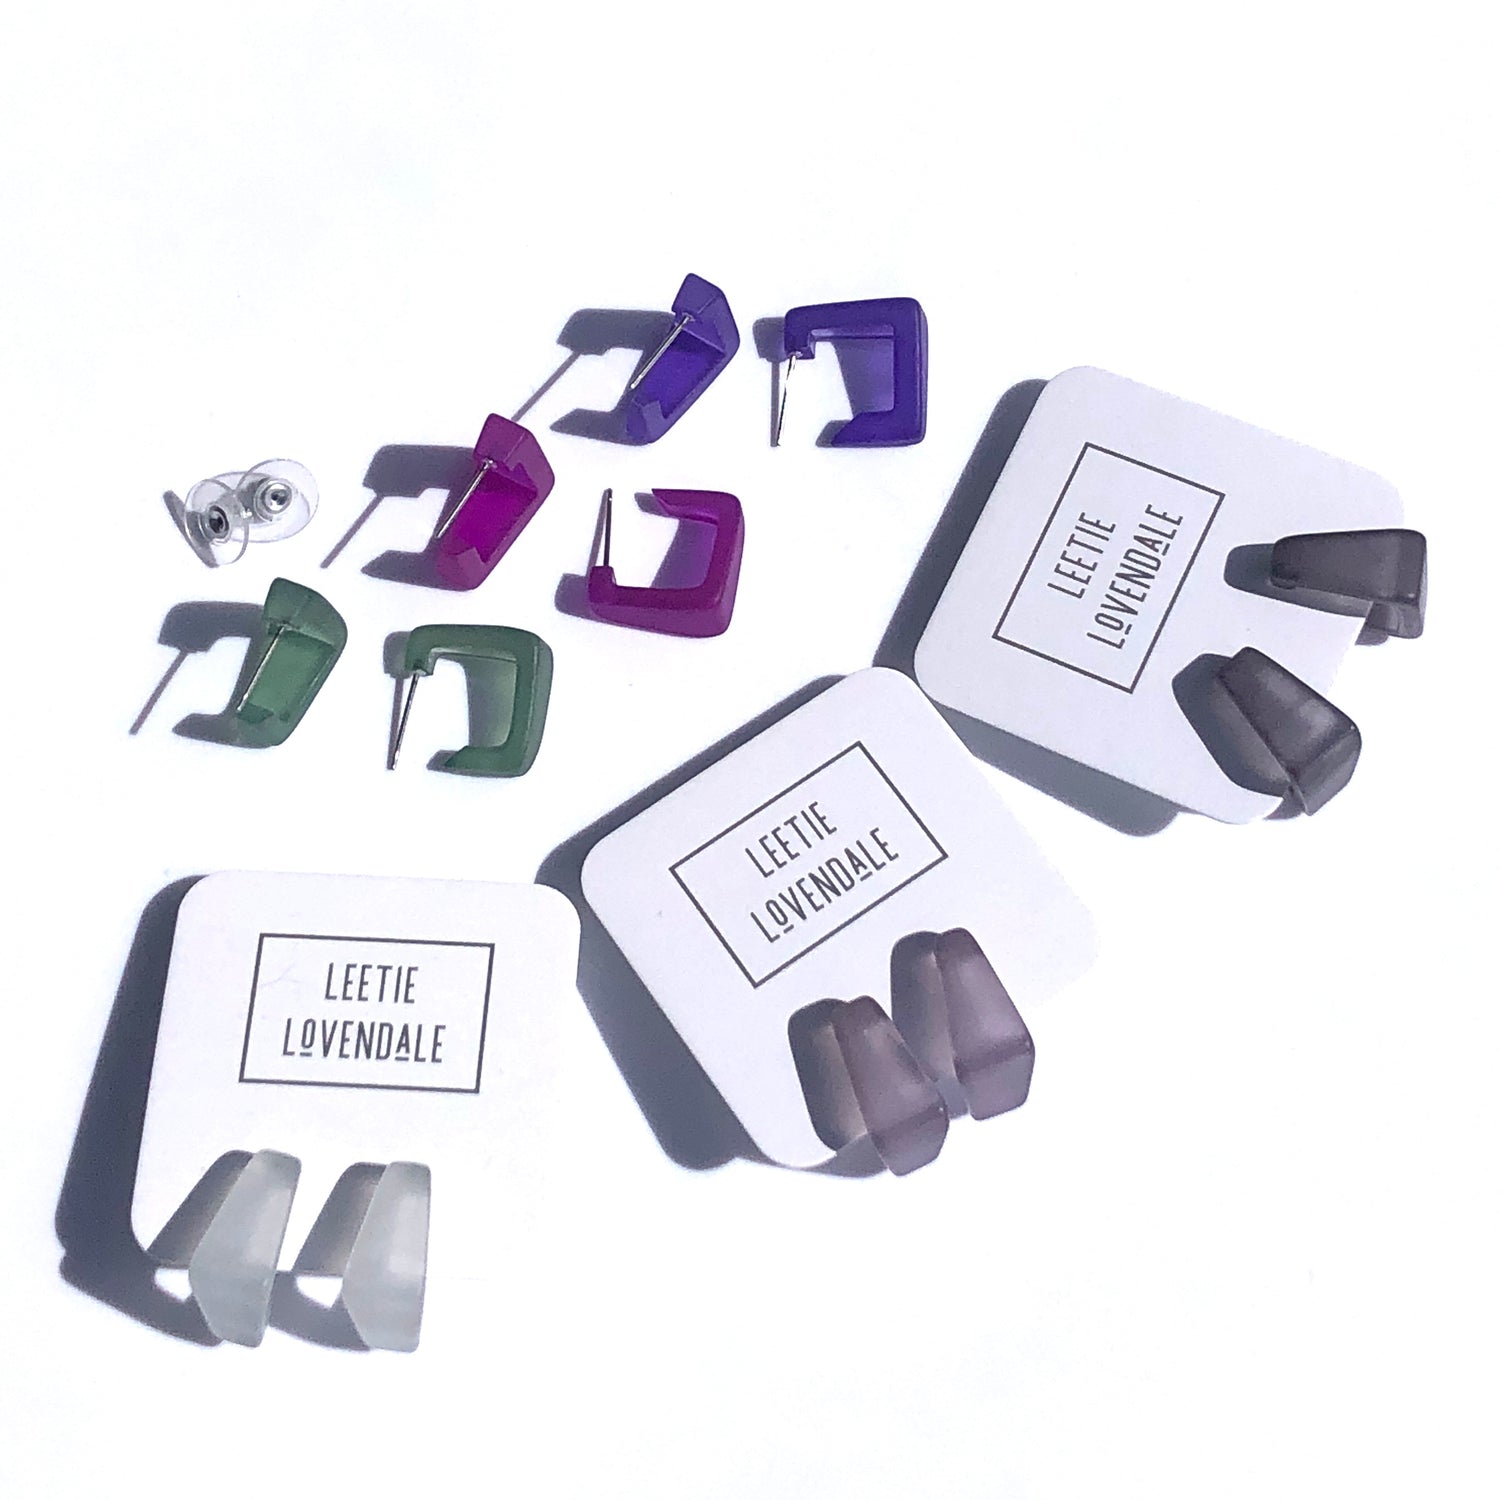 little square hoop earrings in greys and purples